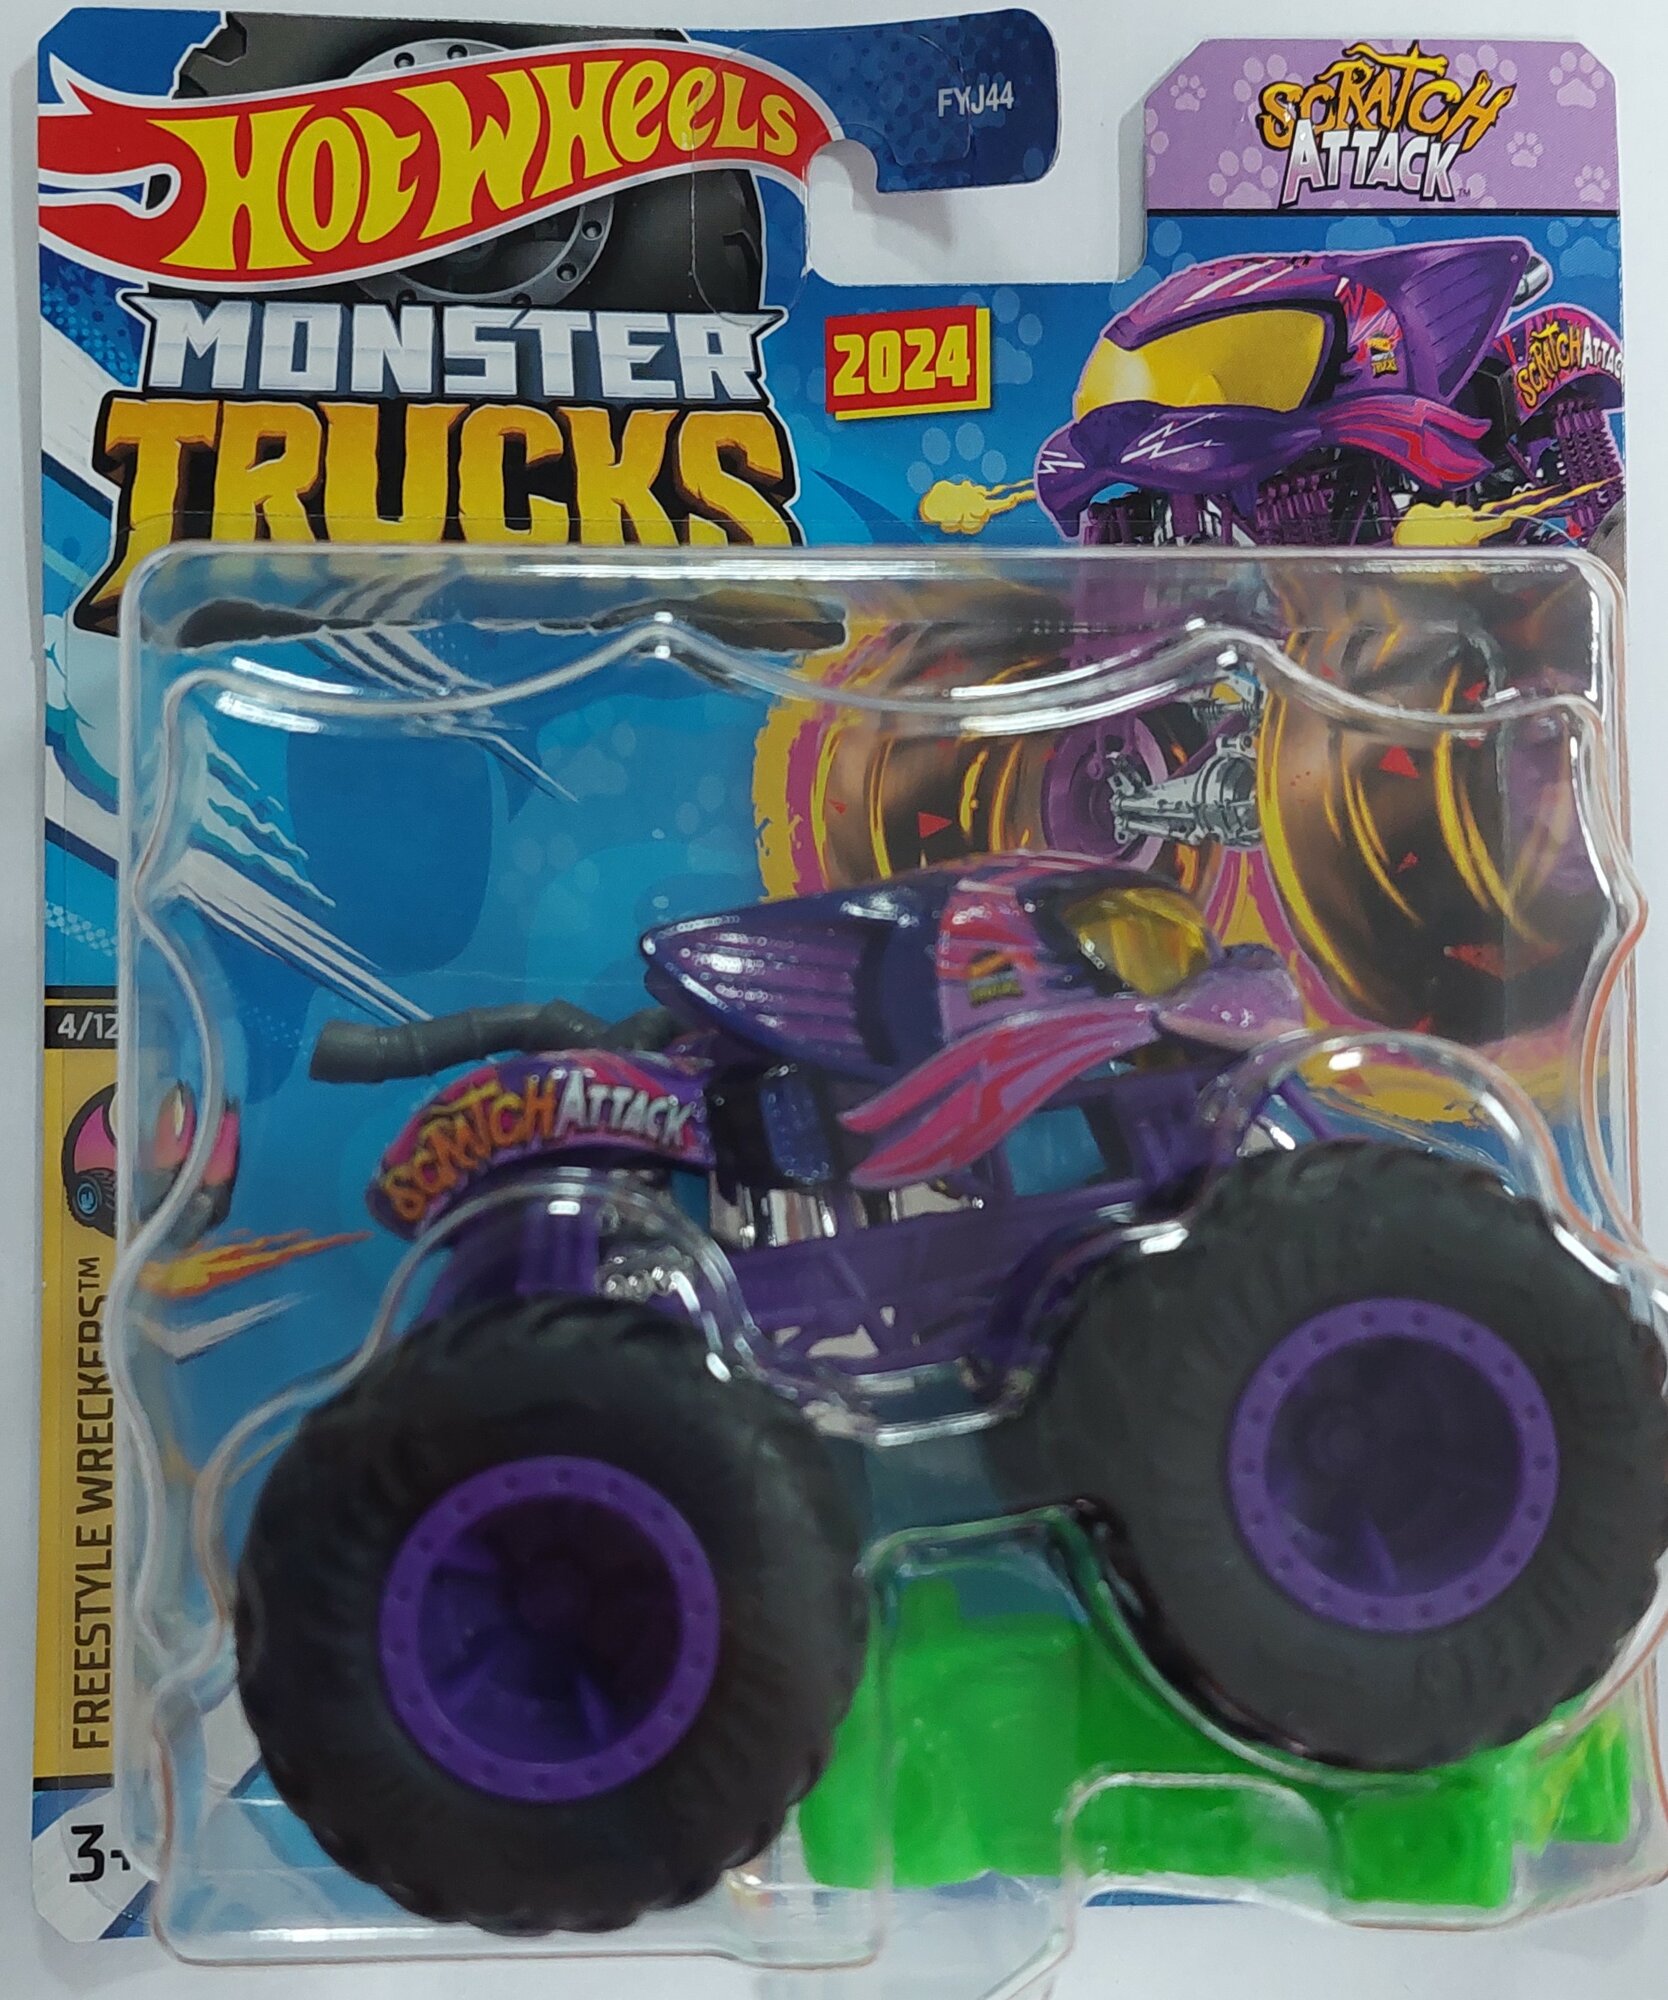 Машинка Hot Wheels (Monster Trucks) Scratch Attack HTM28-LA10